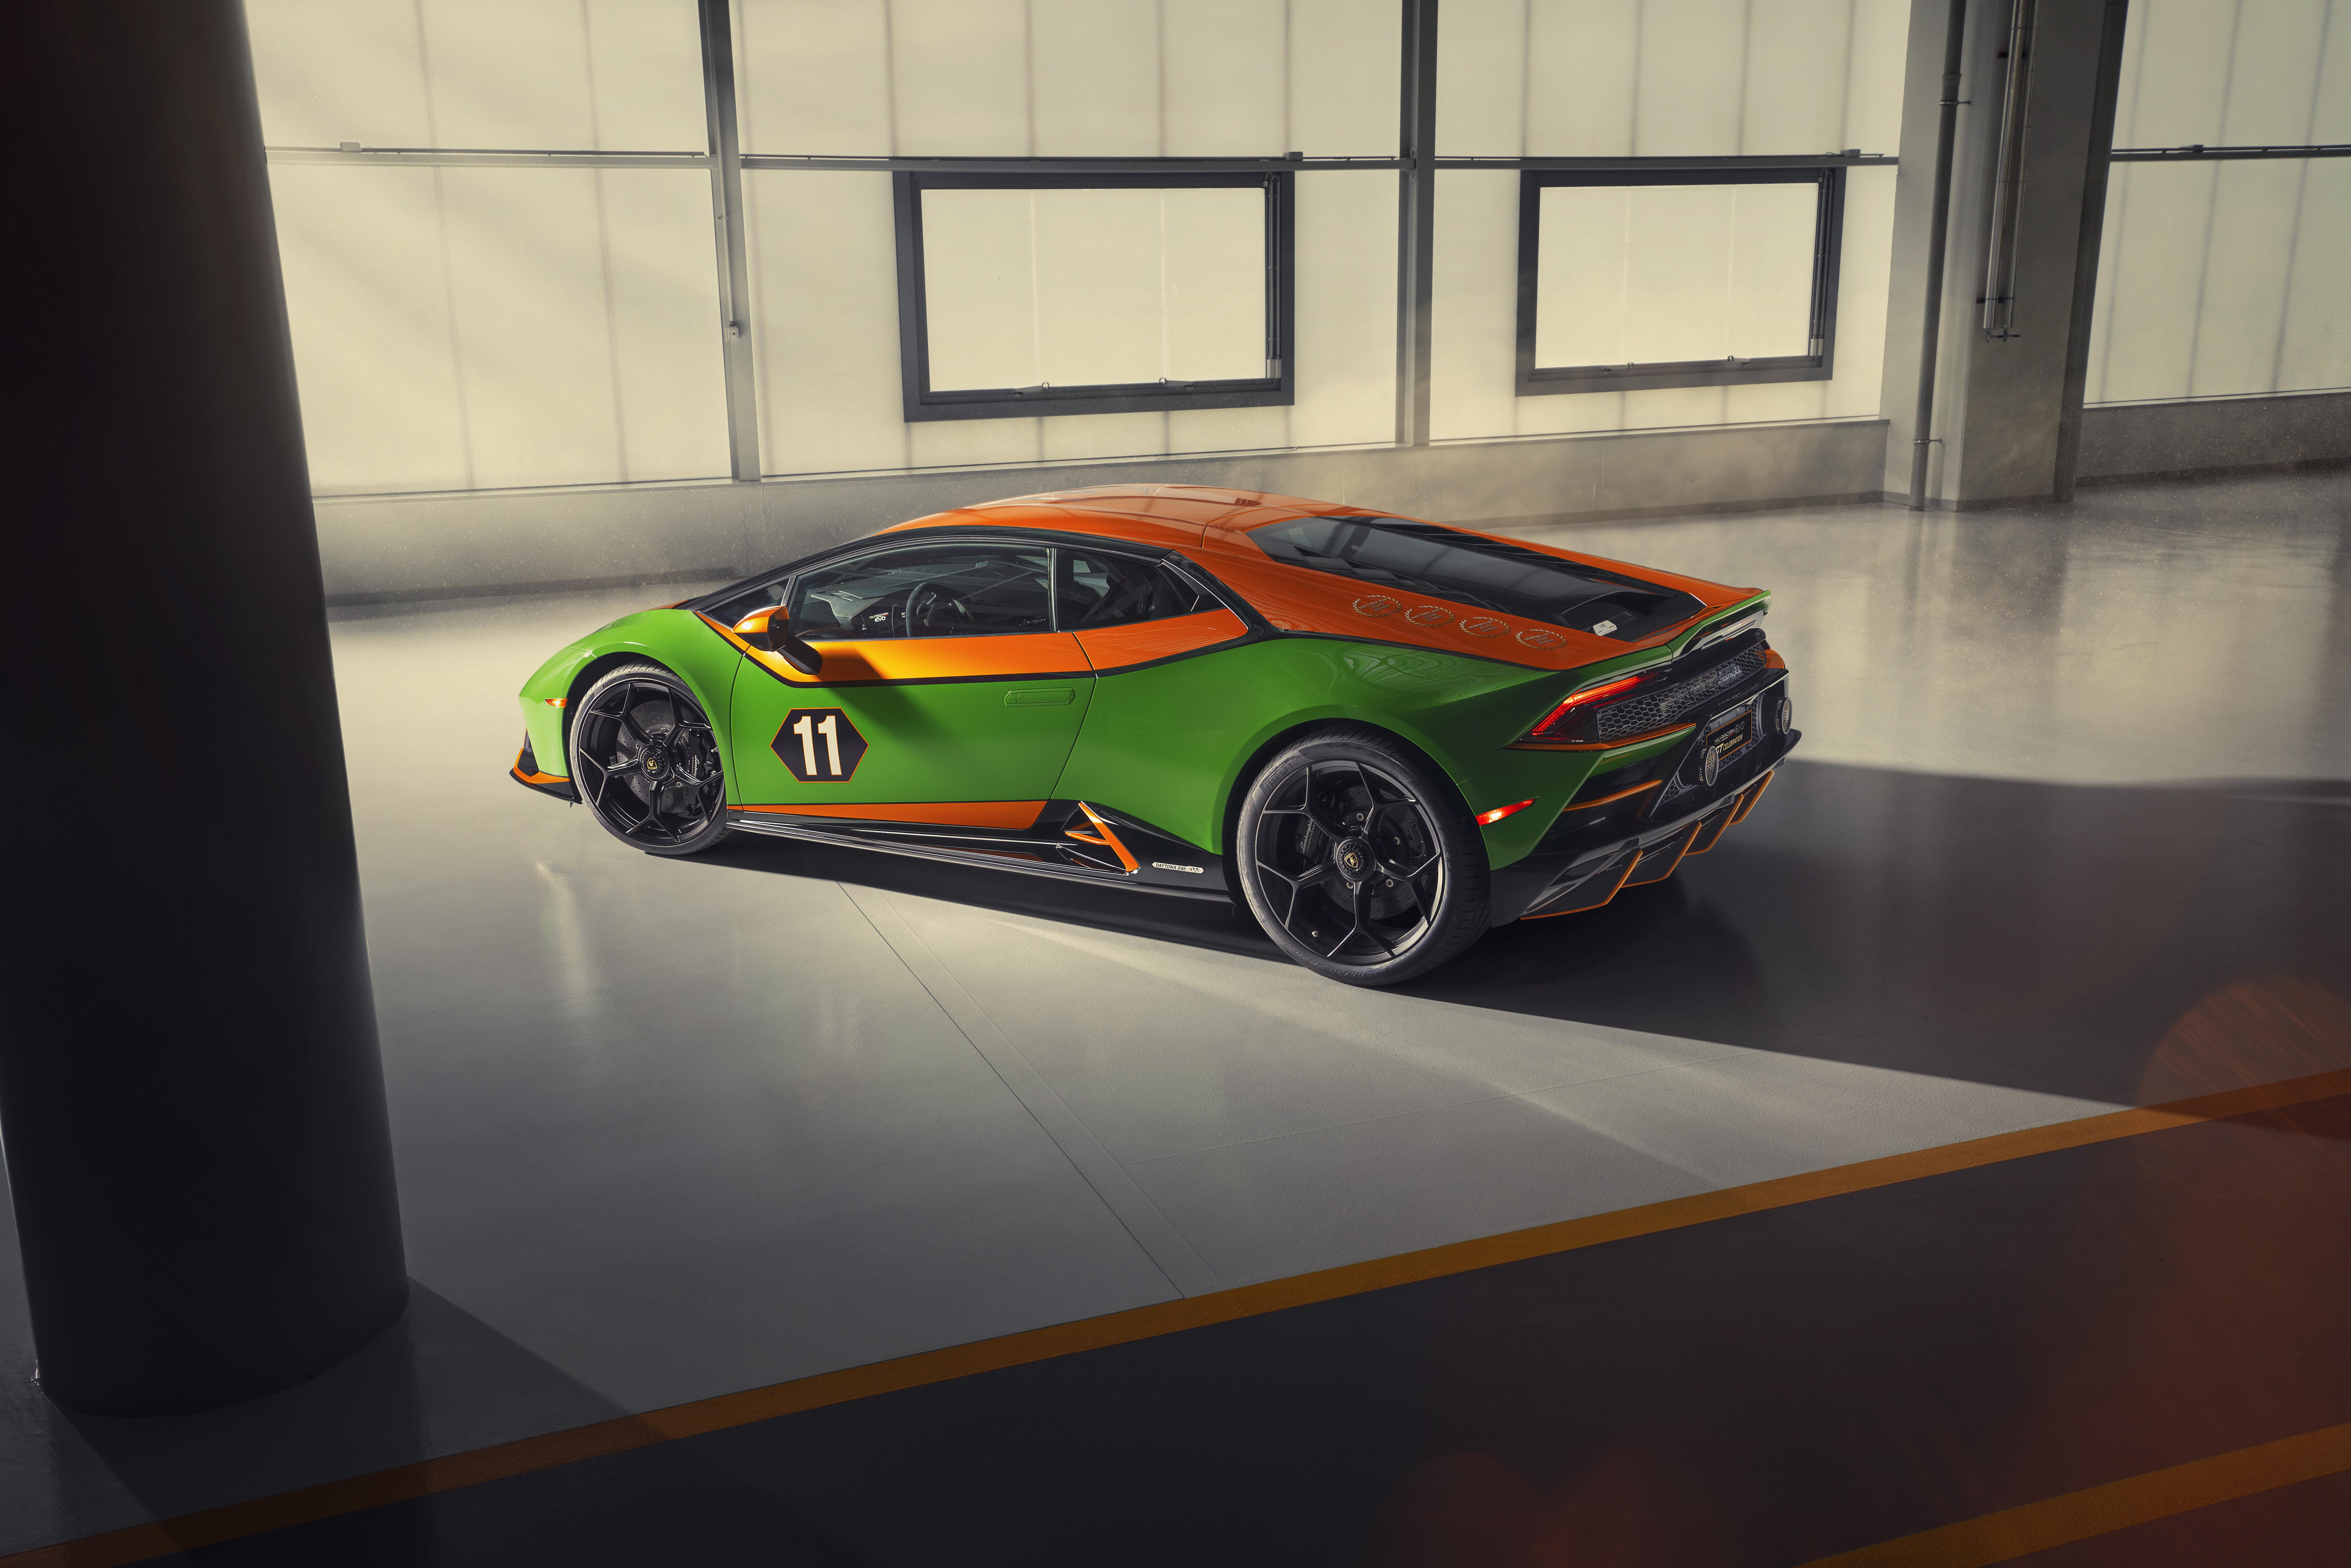 Lamborghini Huracan Evo GT 2020 Rear View, HD Cars, 4k Wallpaper